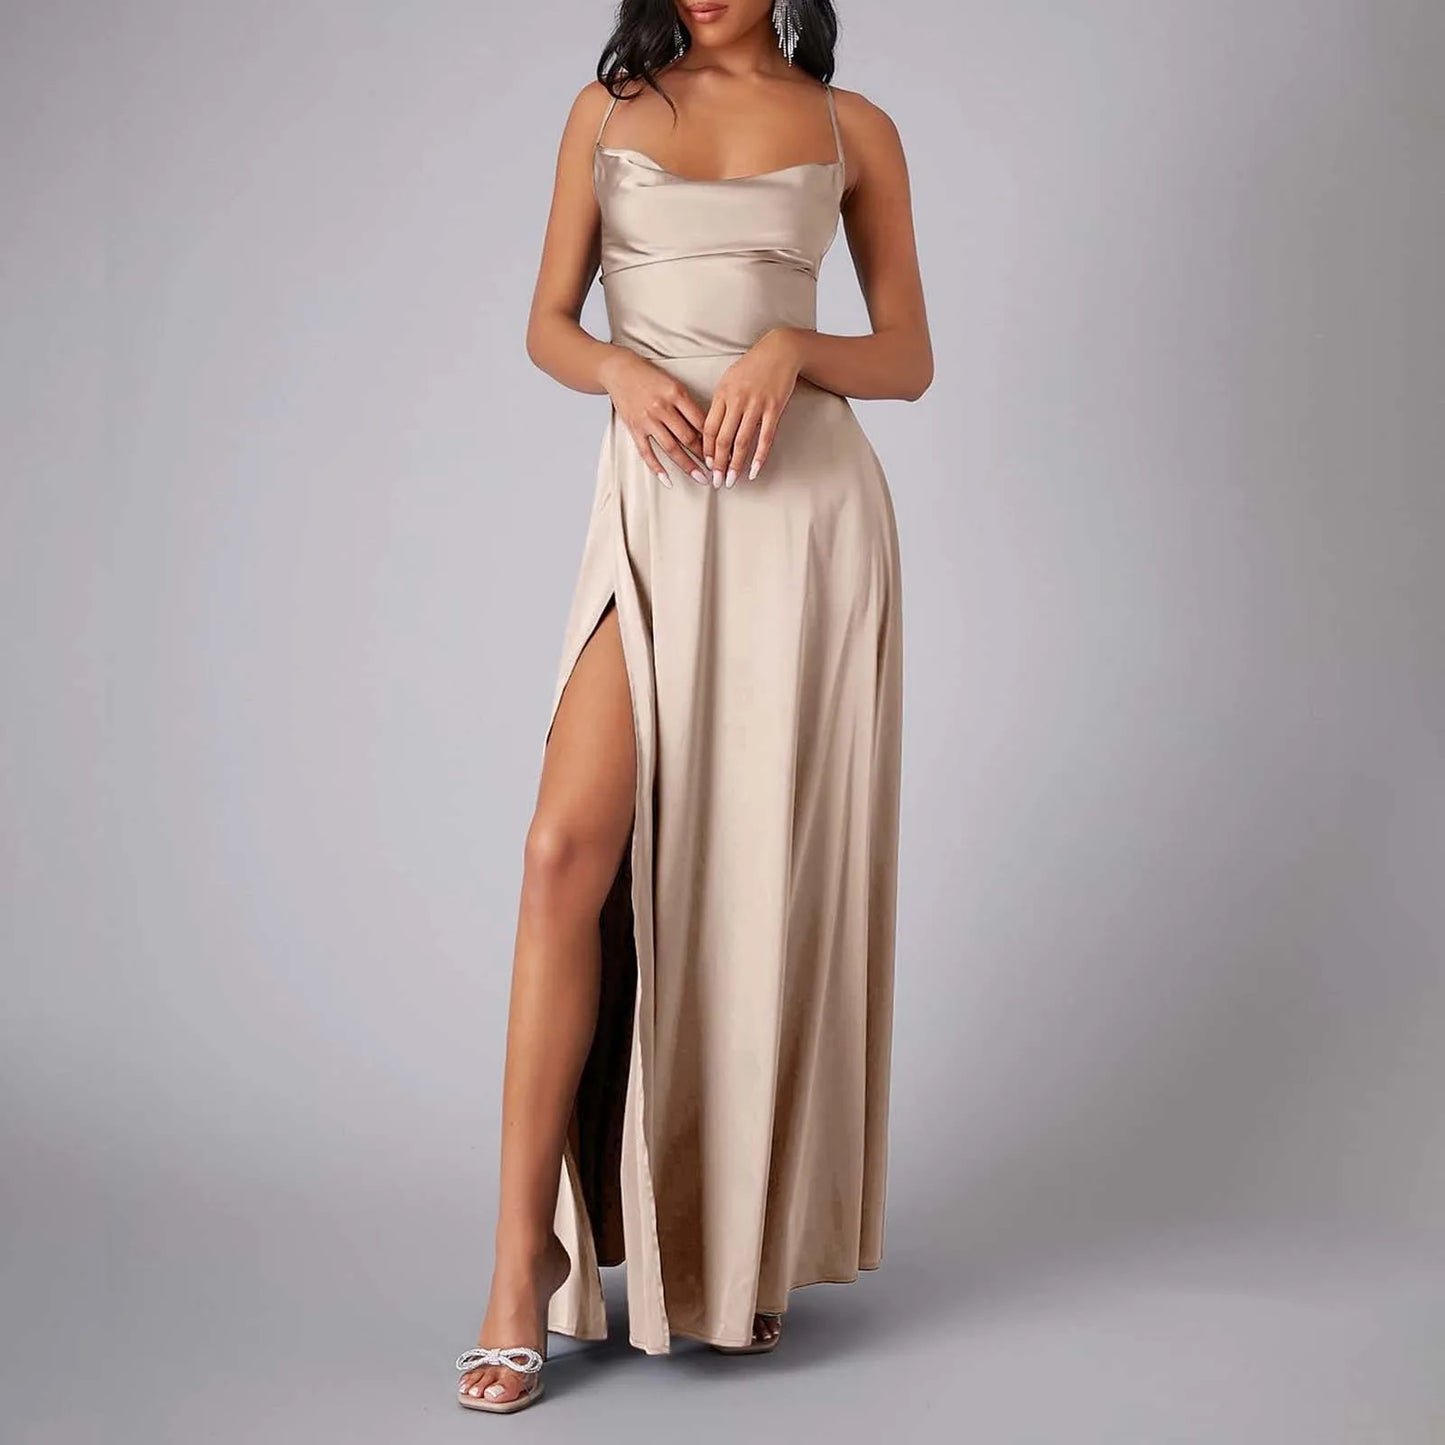 FashionSierra - Spaghetti Straps Satin Maxi High Side Slit Sexy Backless Prom Dress